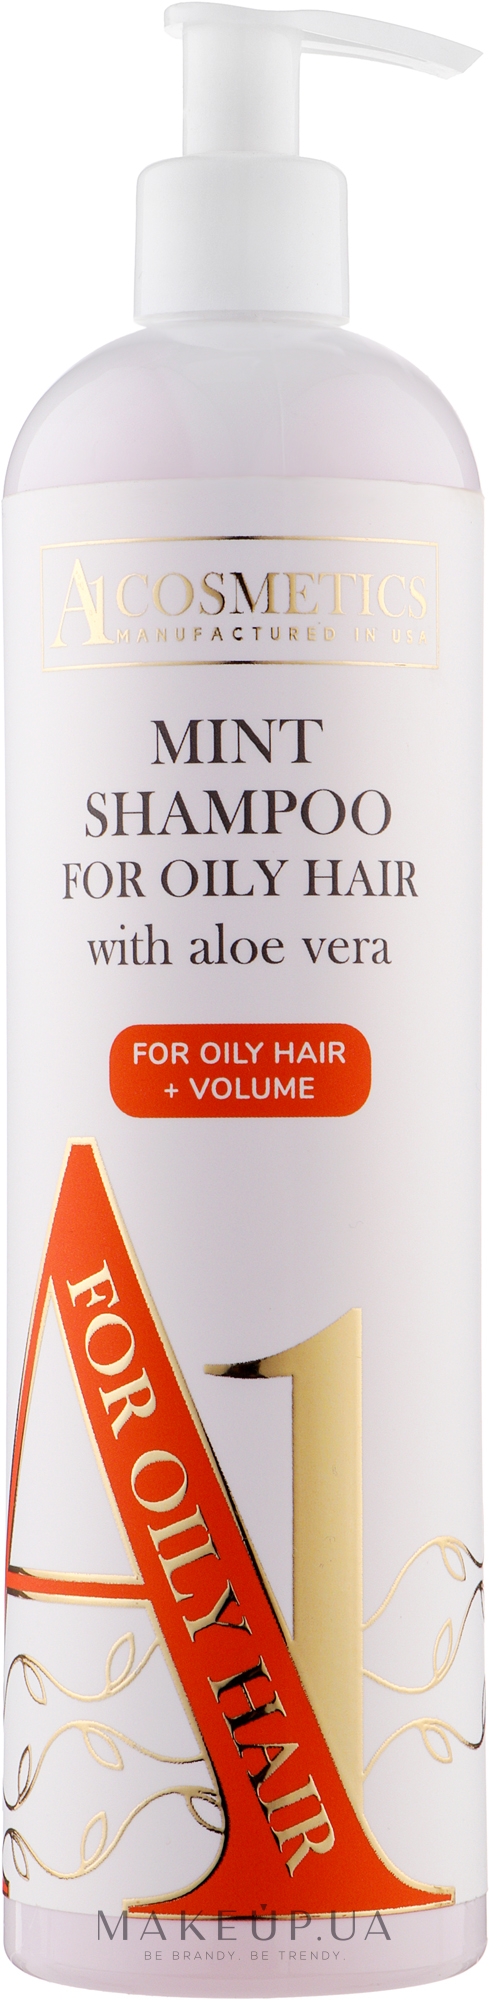 М'ятний шампунь для жирного волосся - A1 Cosmetics Mint Shampoo For Oily Hair With Aloe Vera + Volume — фото 500ml